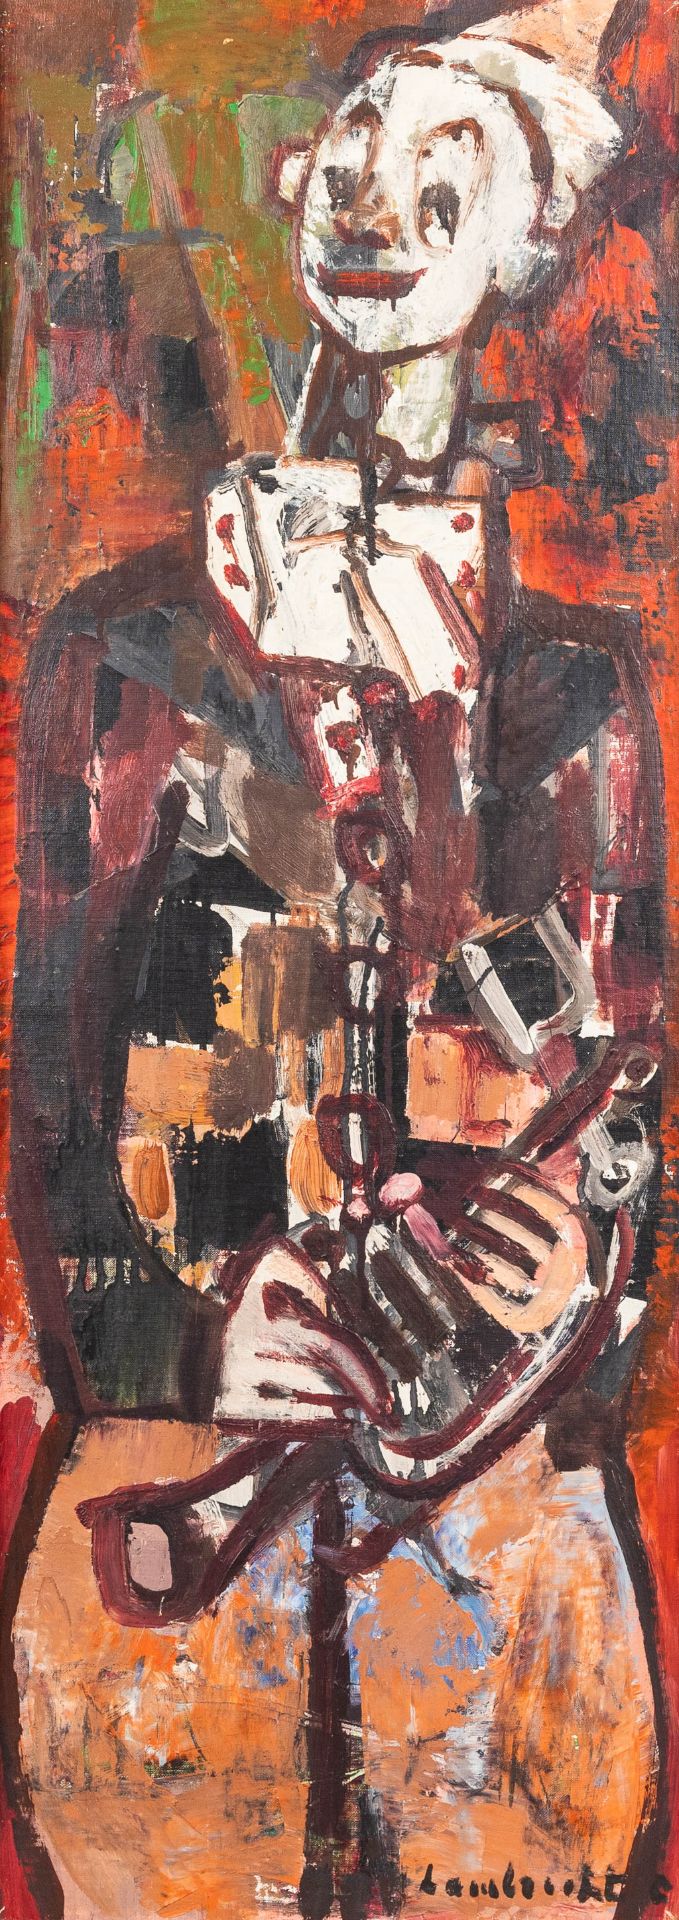 Constant LAMBRECHT (1915-1993) 'Expressionist Clown' oil on board. (W: 40 x H: 110 cm)